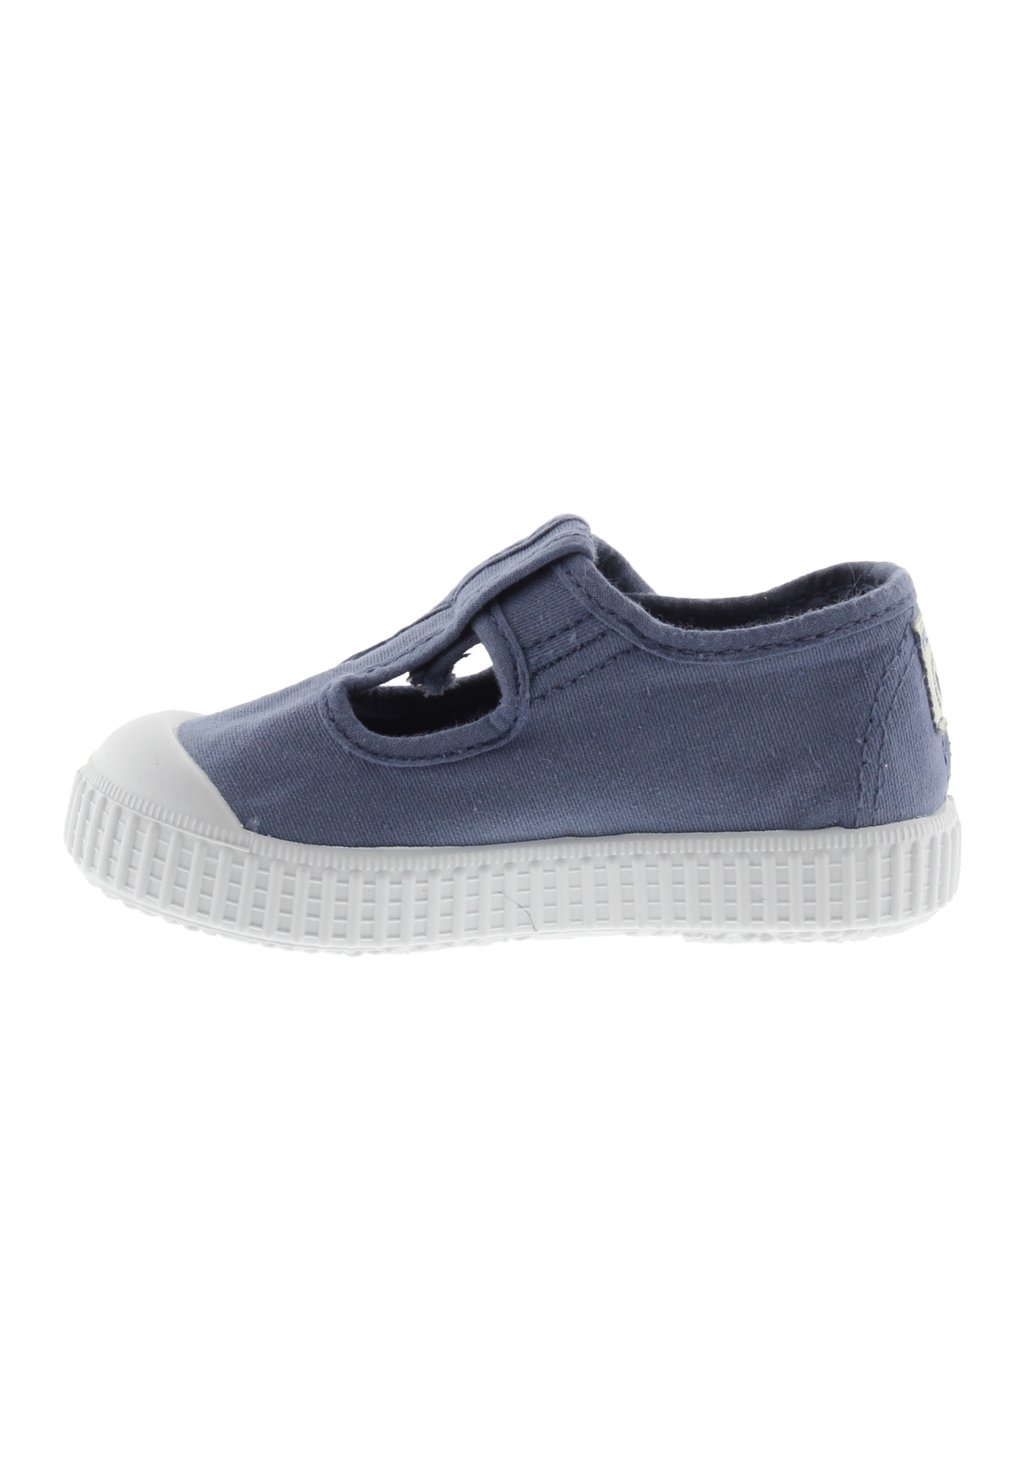 Кроссовки низкие LONA MARINO Victoria Shoes, цвет azul кроссовки victoria shoes tribu lona contrast gris